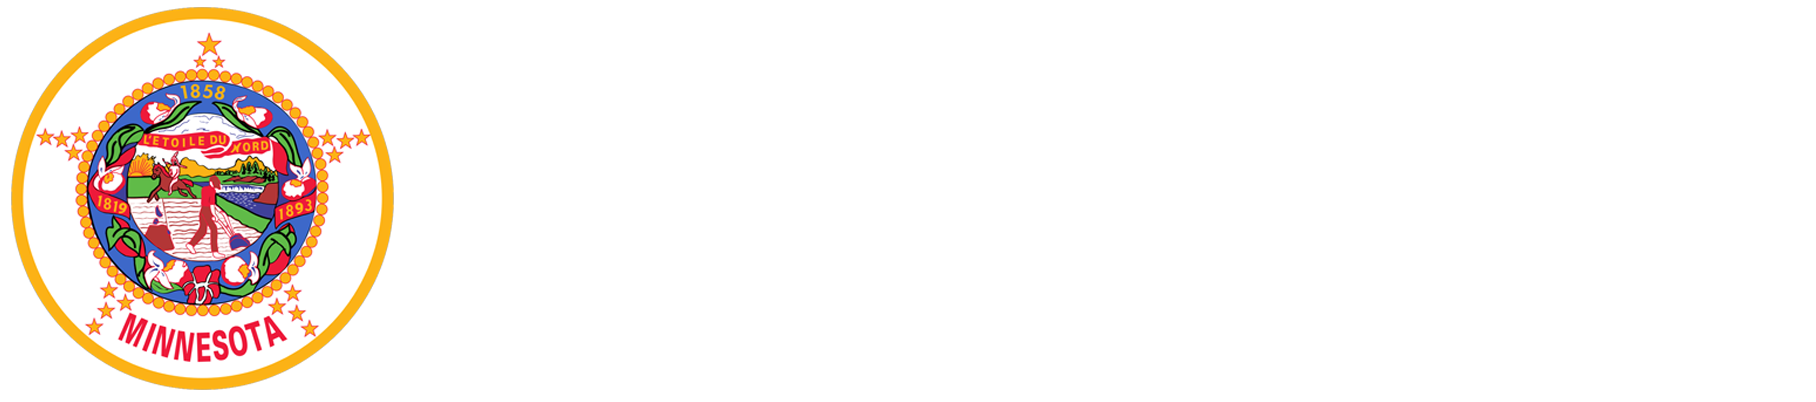 Representative Pete Stauber logo